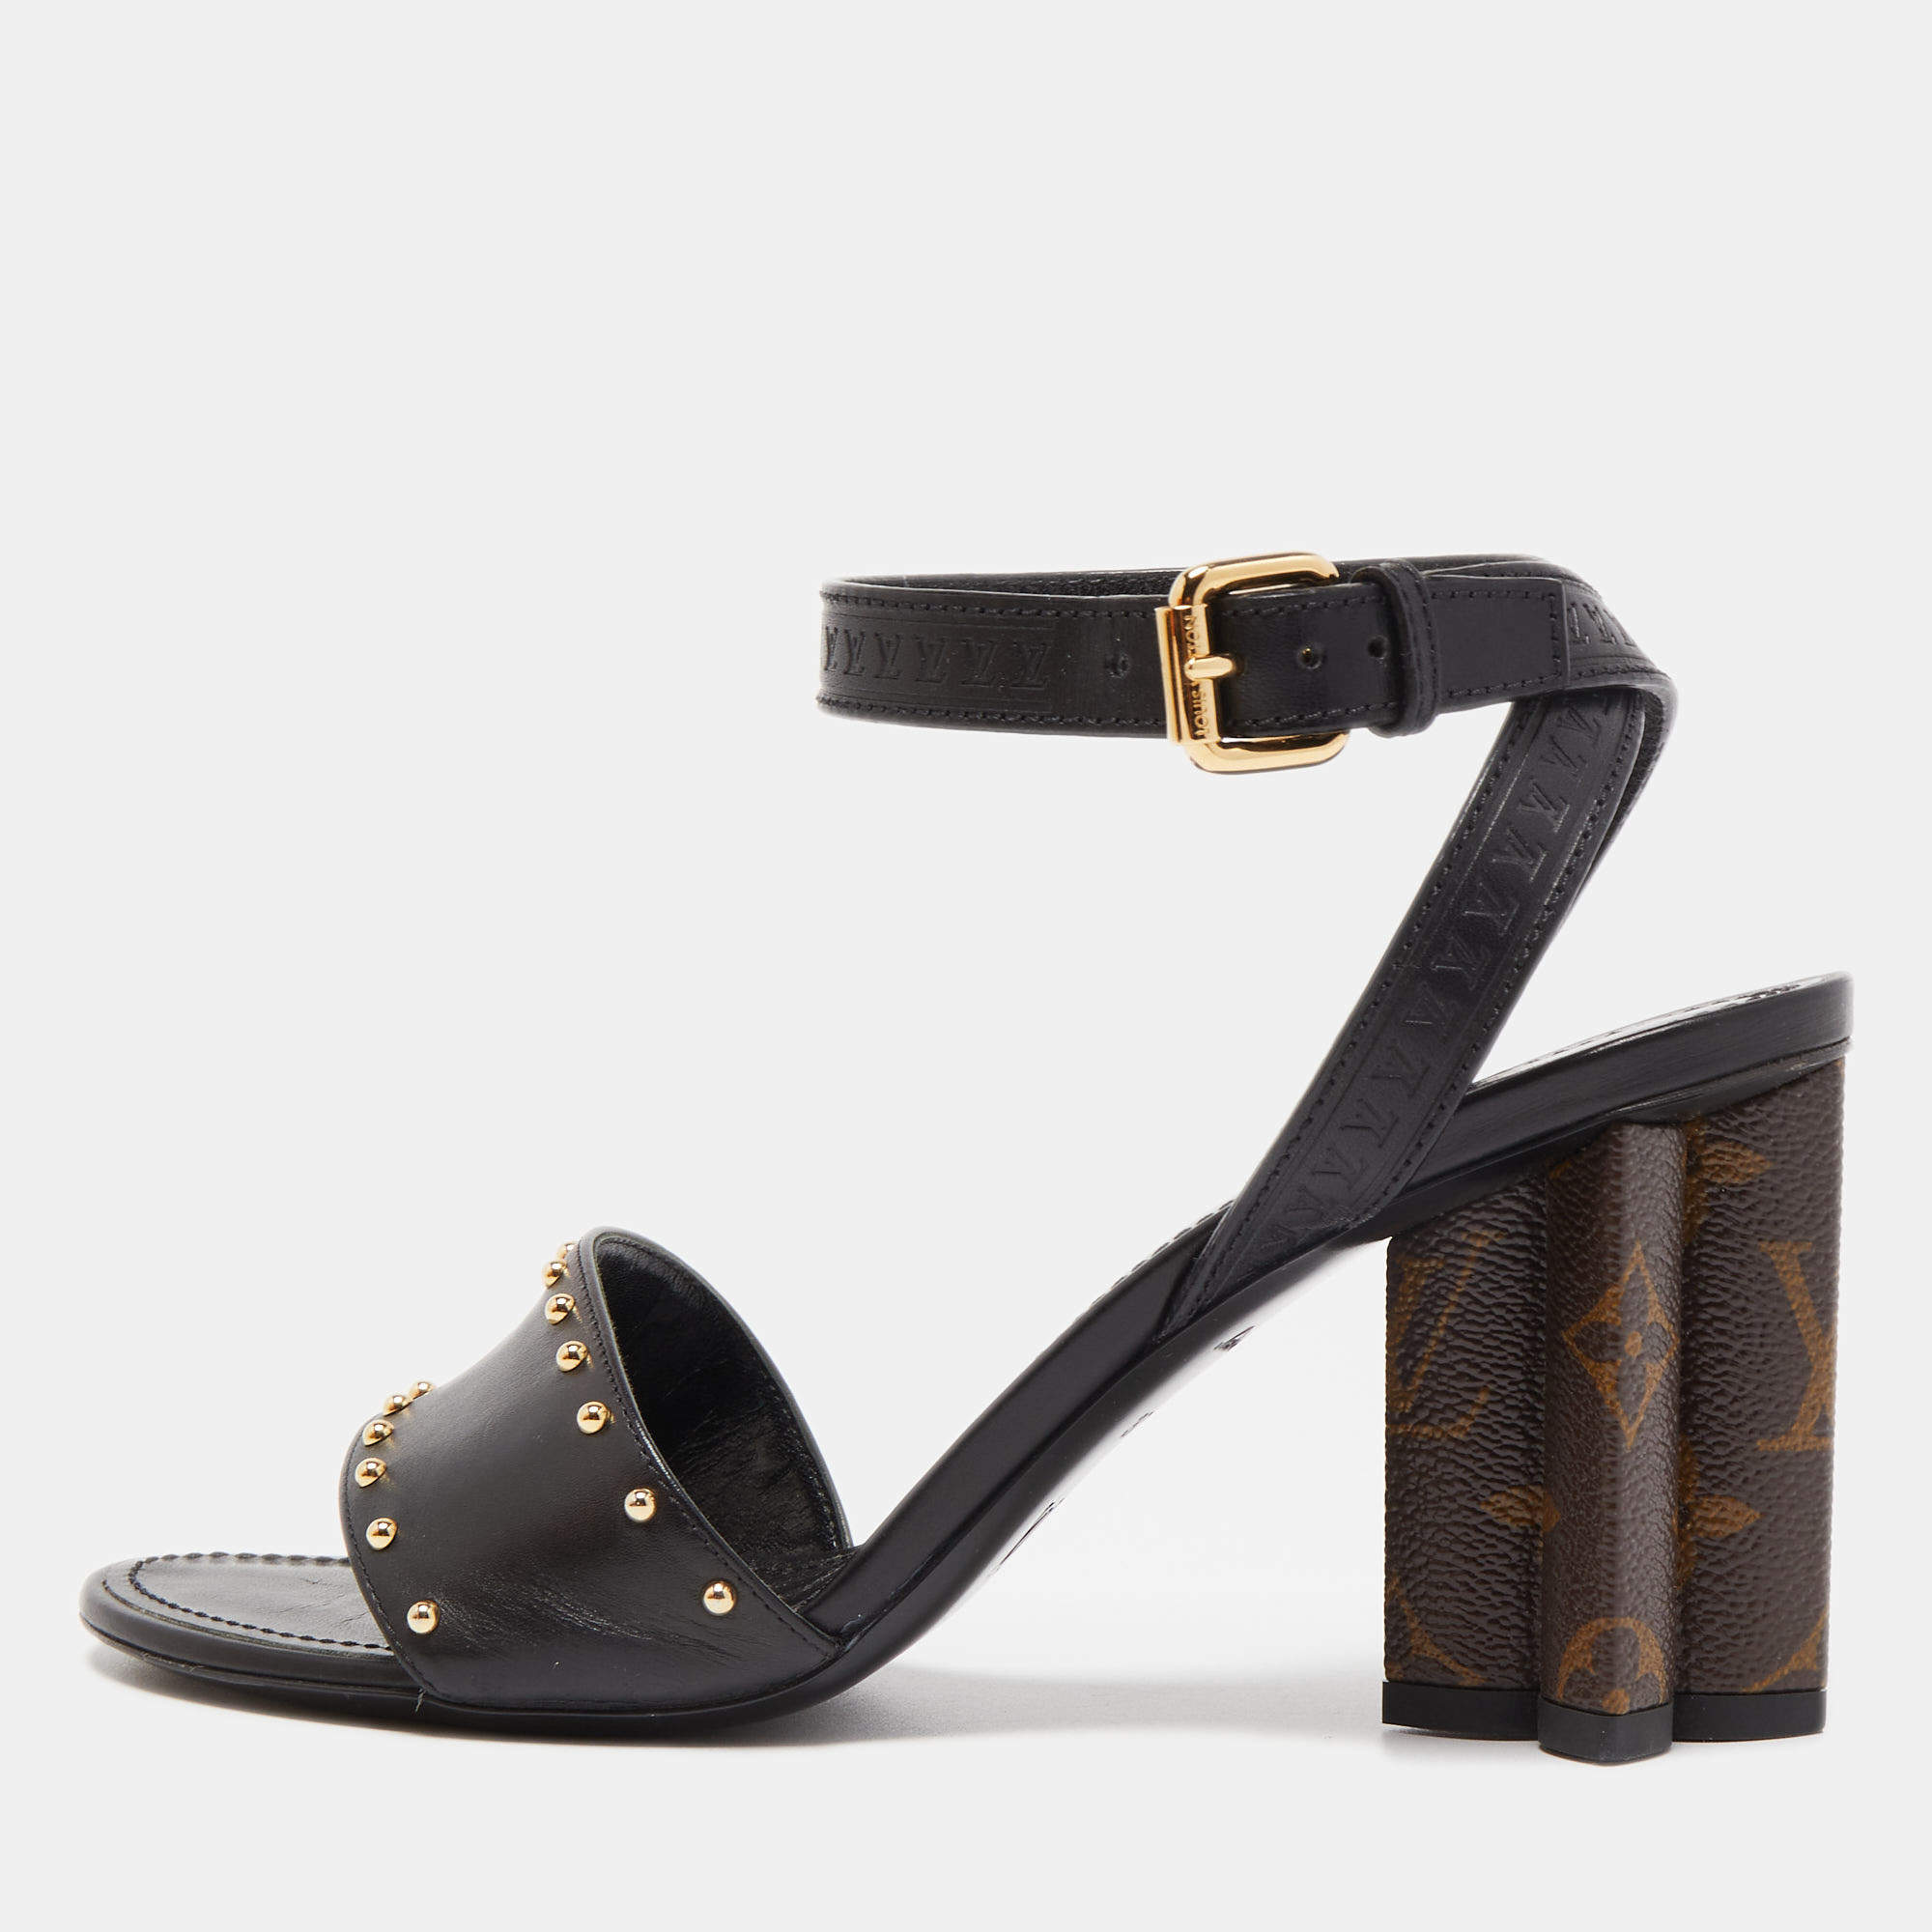 Louis Vuitton Silhouette Ankle Boot BLACK. Size 37.5